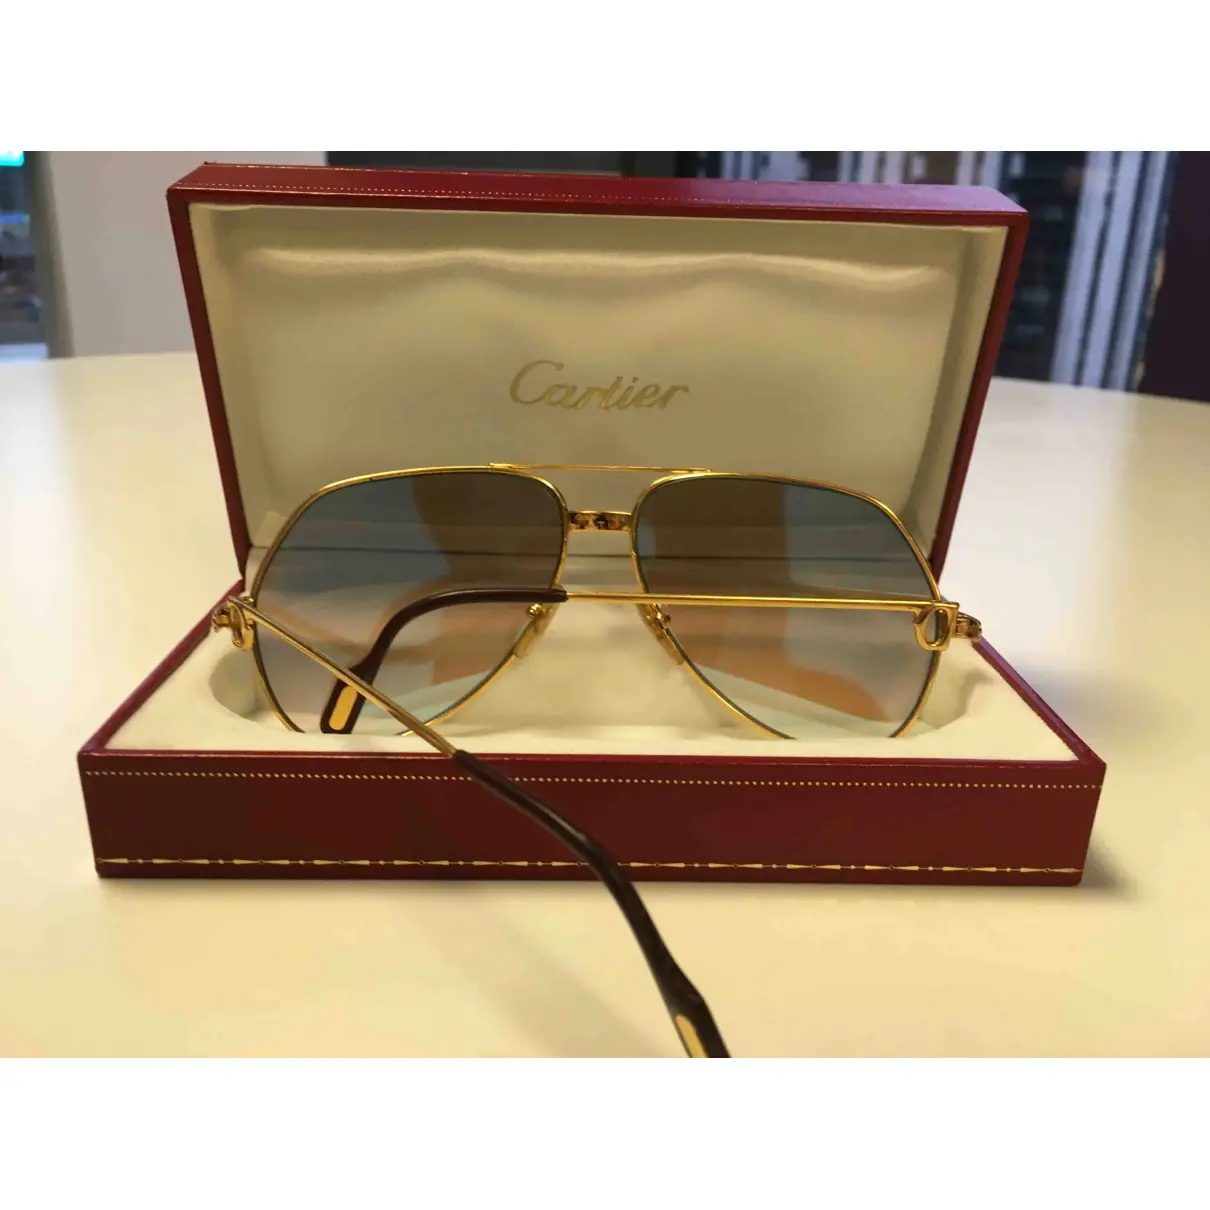 Cartier Sunglasses for sale